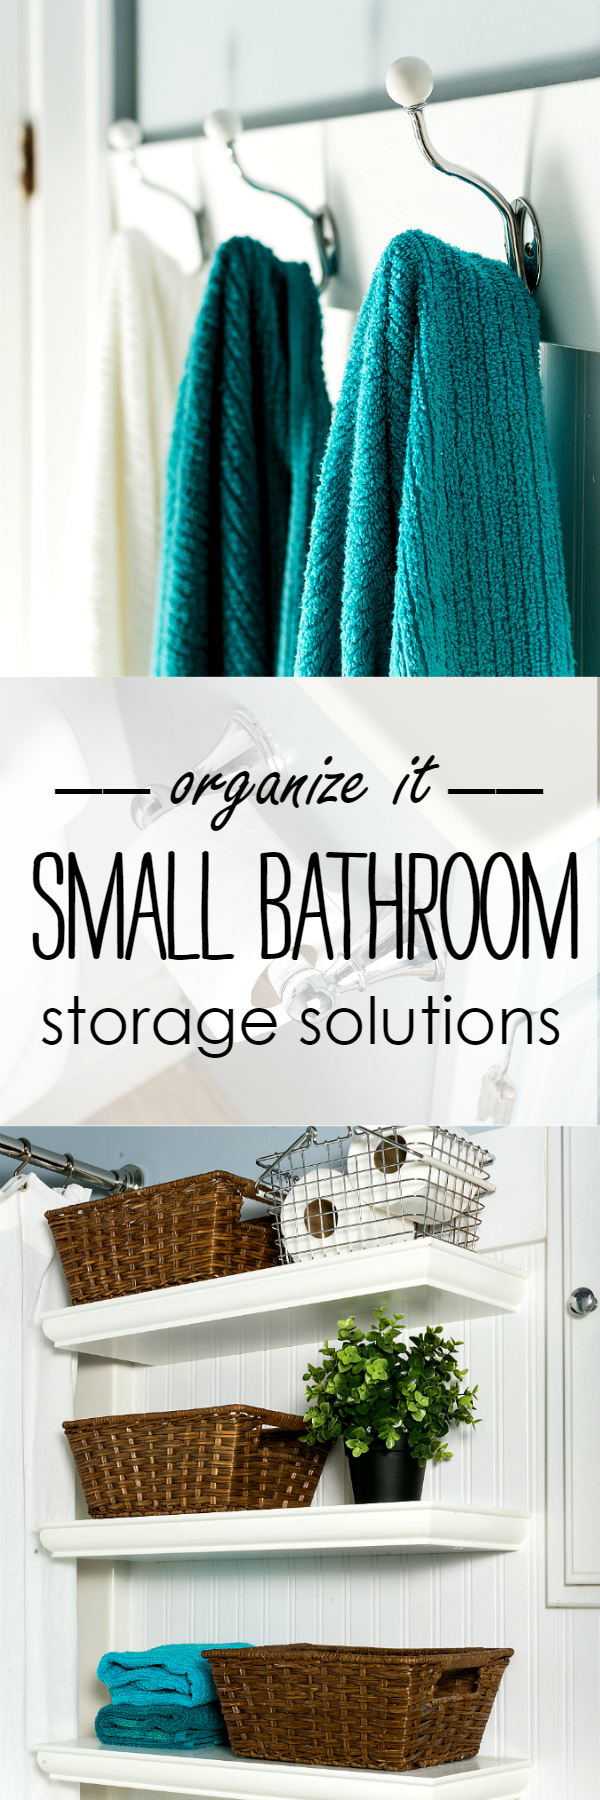 Organization ideas for small bathrooms - Home organization ideas